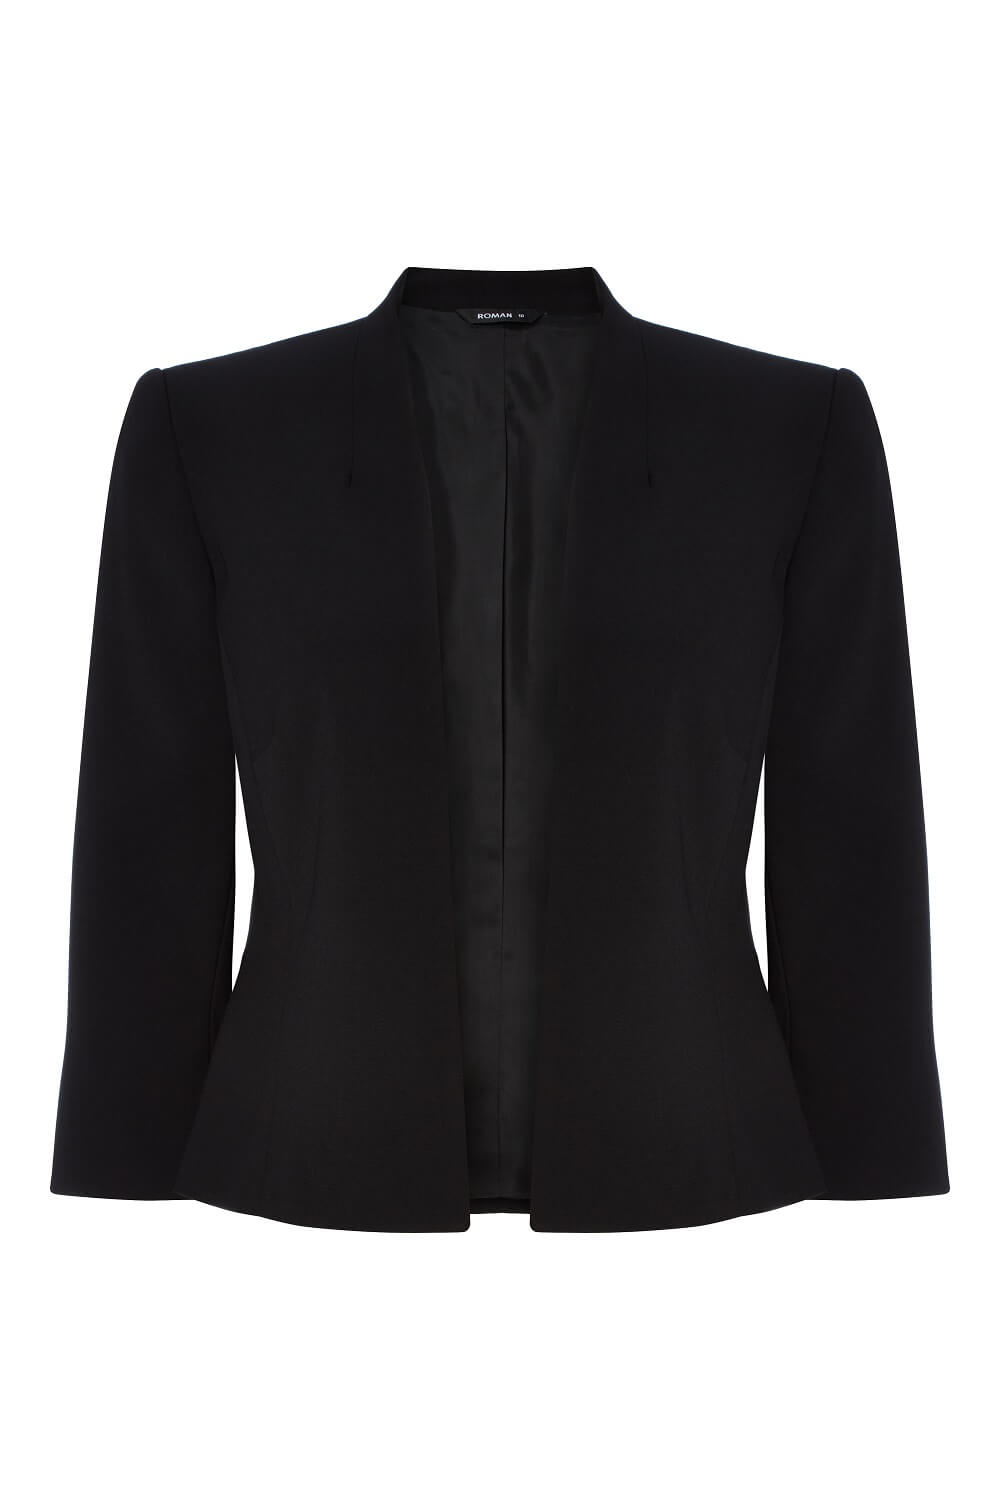 3/4 Sleeve Rochette Jacket in Black - Roman Originals UK